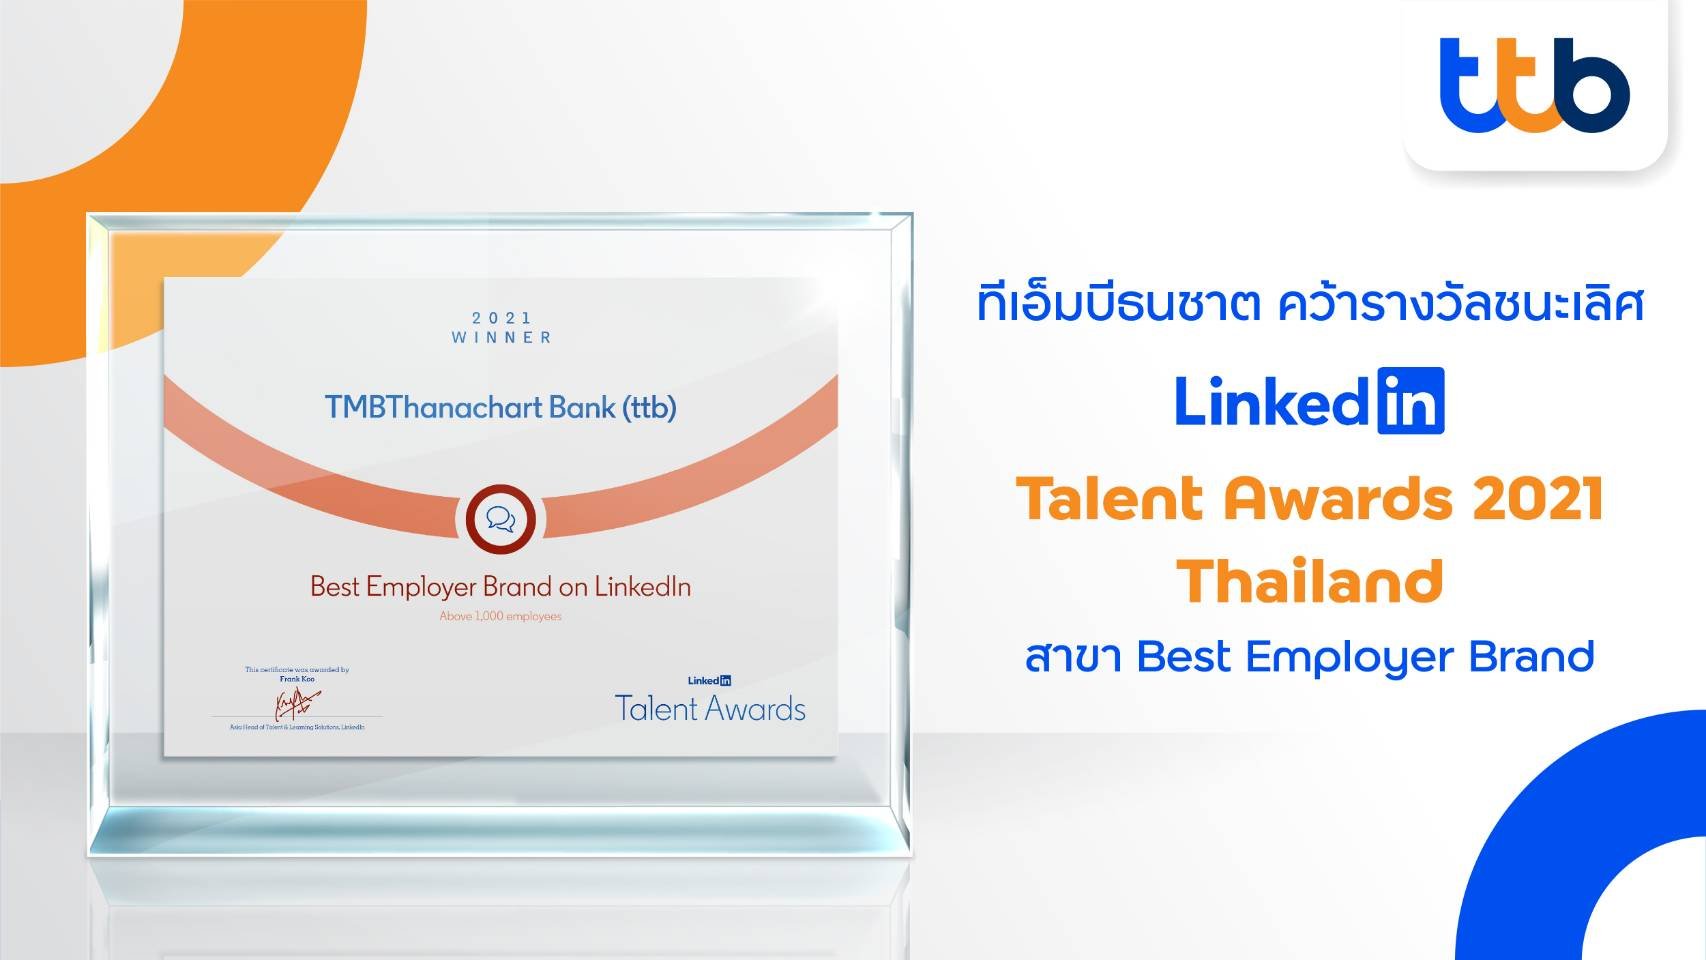 ttb  คว้ารางวัลชนะเลิศ LinkedIn Talent Awards 2021 Thailand สาขา Best Employer Brand